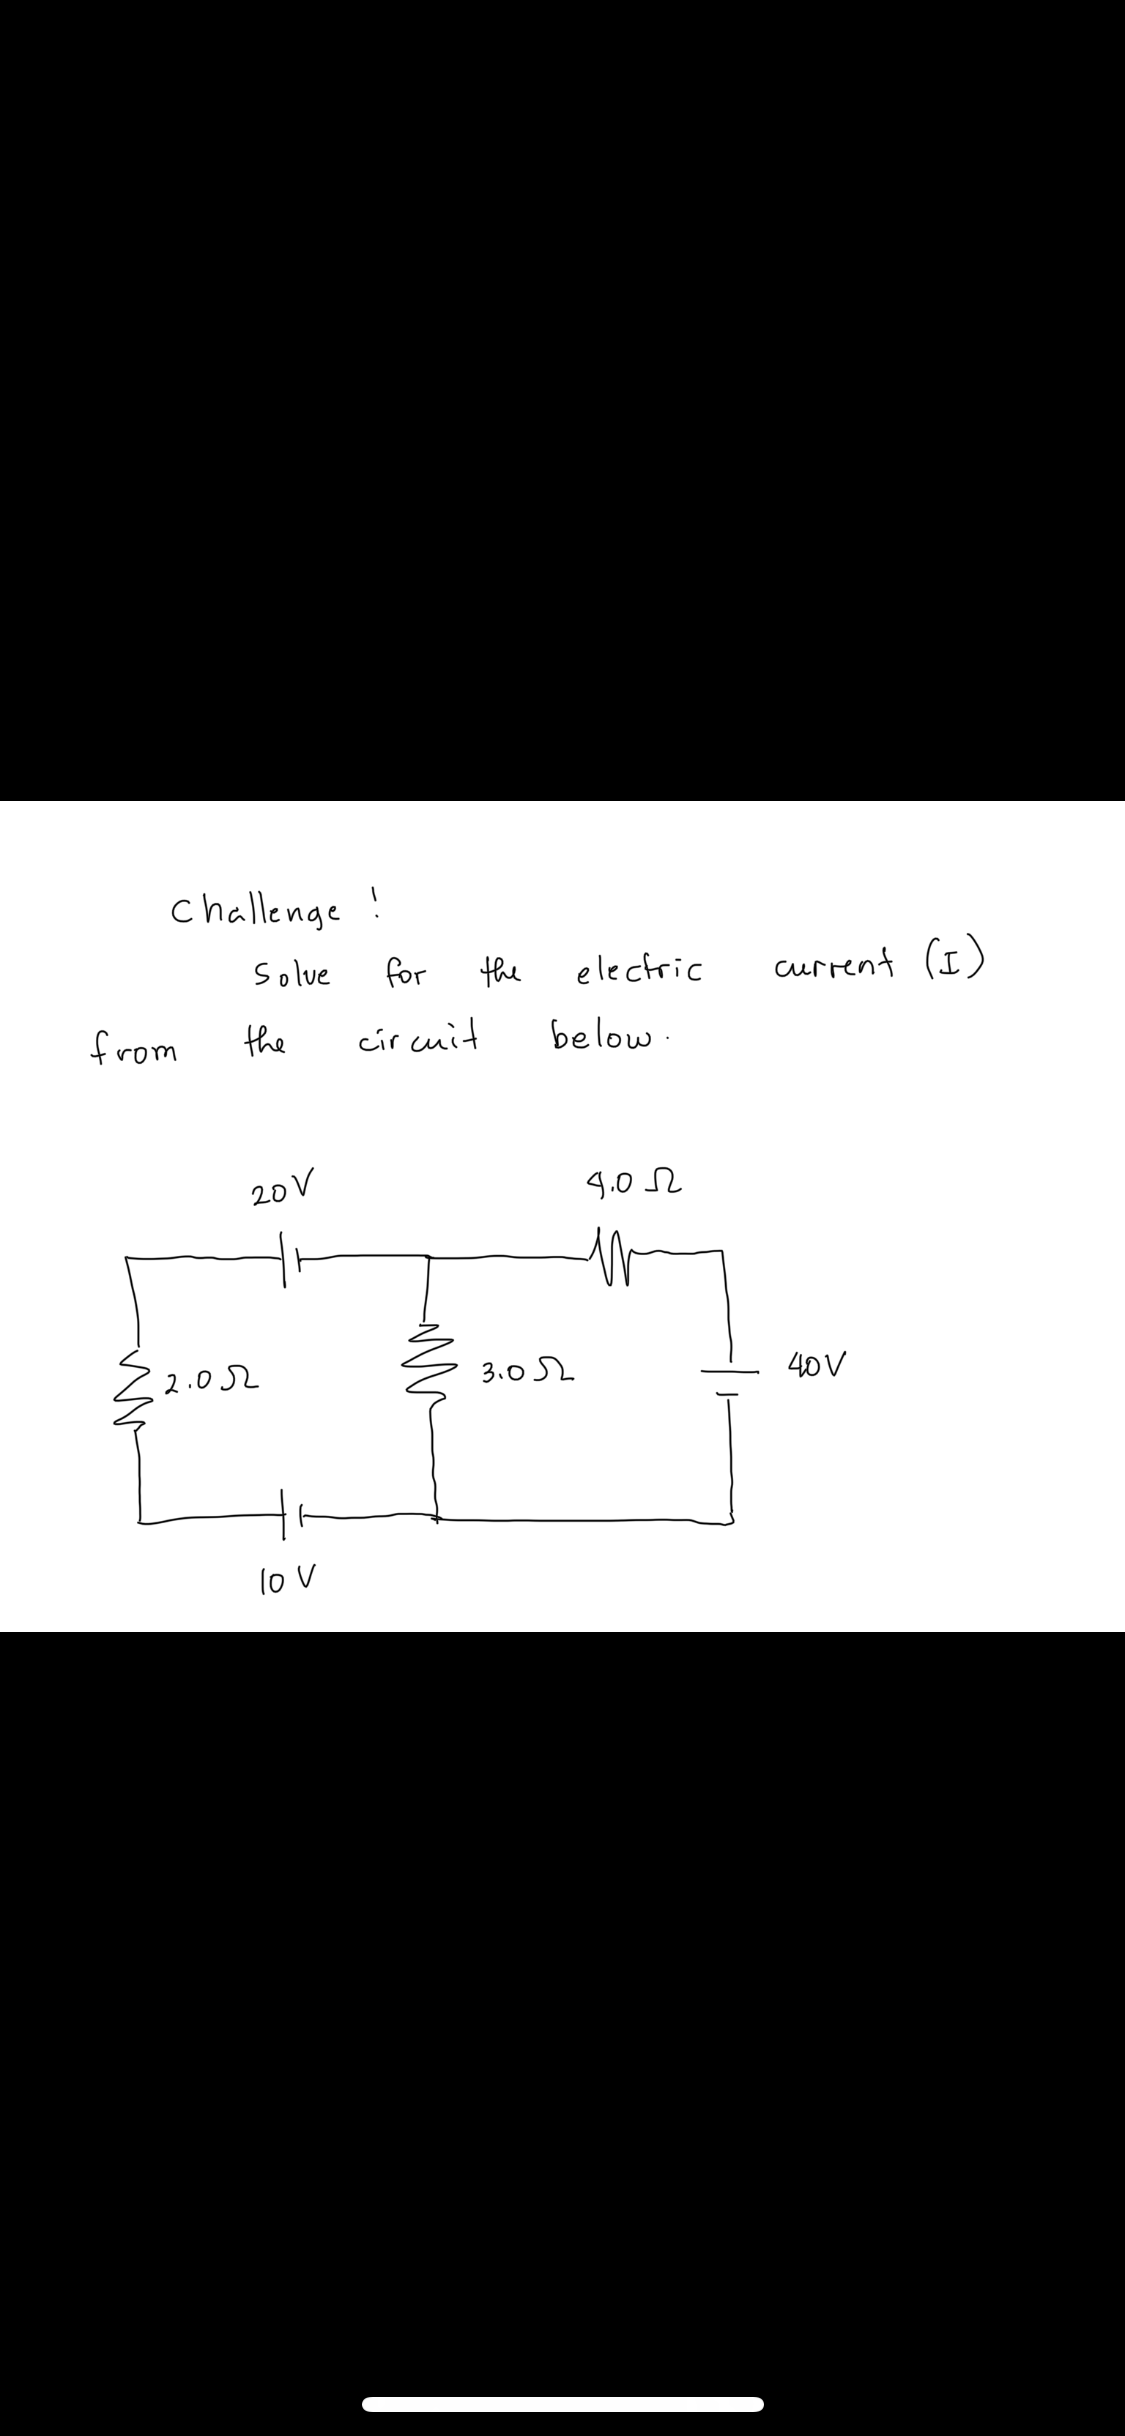 challenge !
Solve
for
the
electric
current (I)
from
the
círcuit
below.
20 V
4.0 2
2.0 L
3.0 52
40V
lo V
